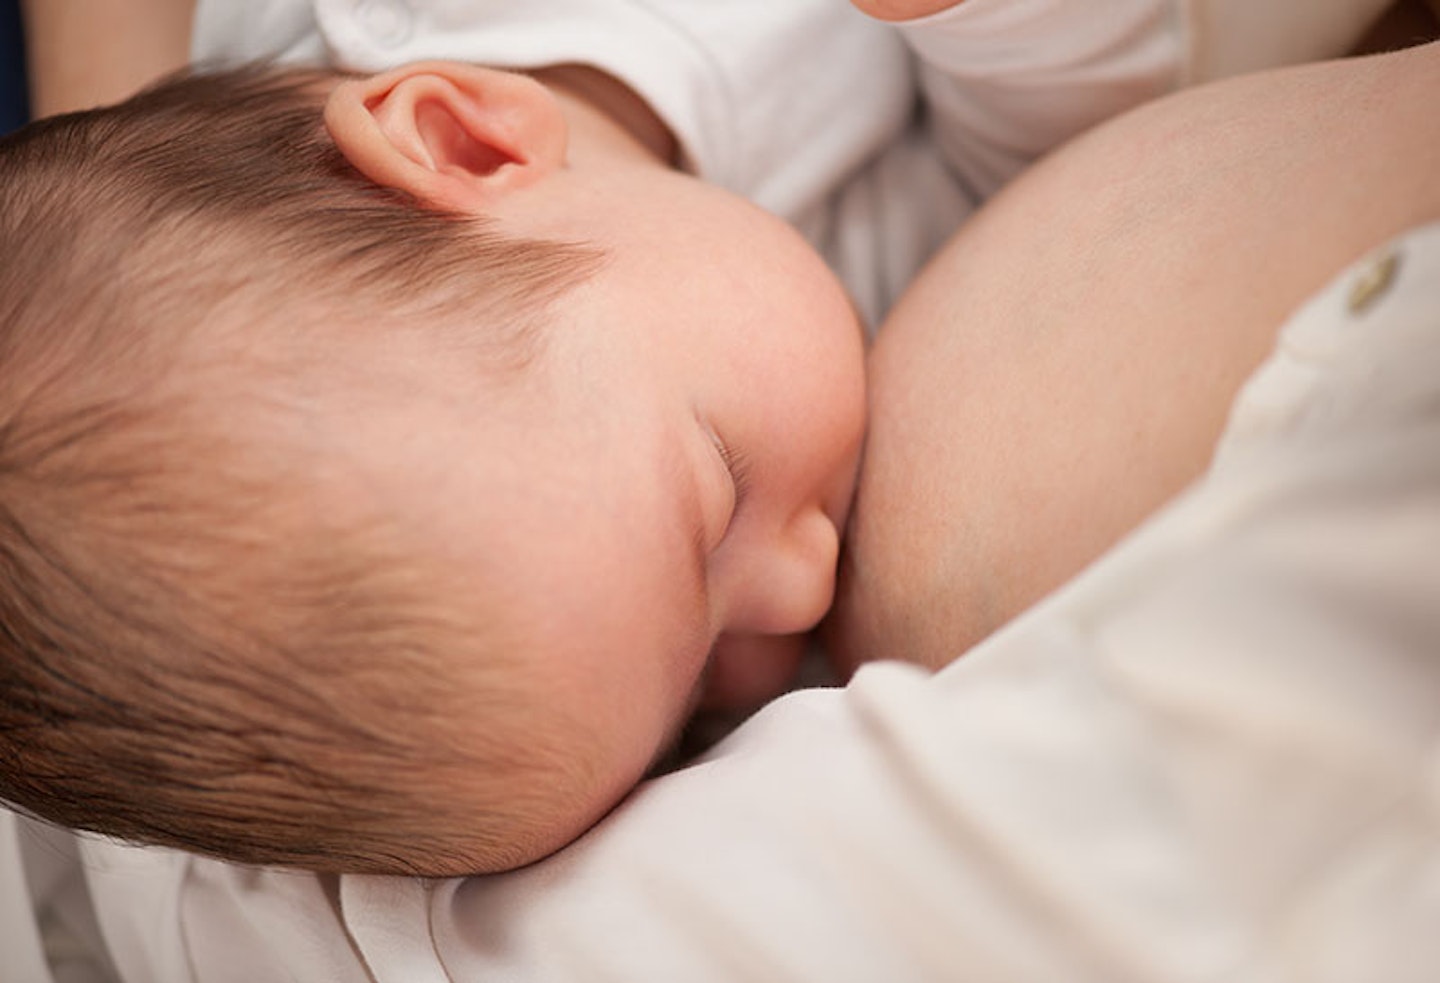 Breastfeeding can neutralise HIV